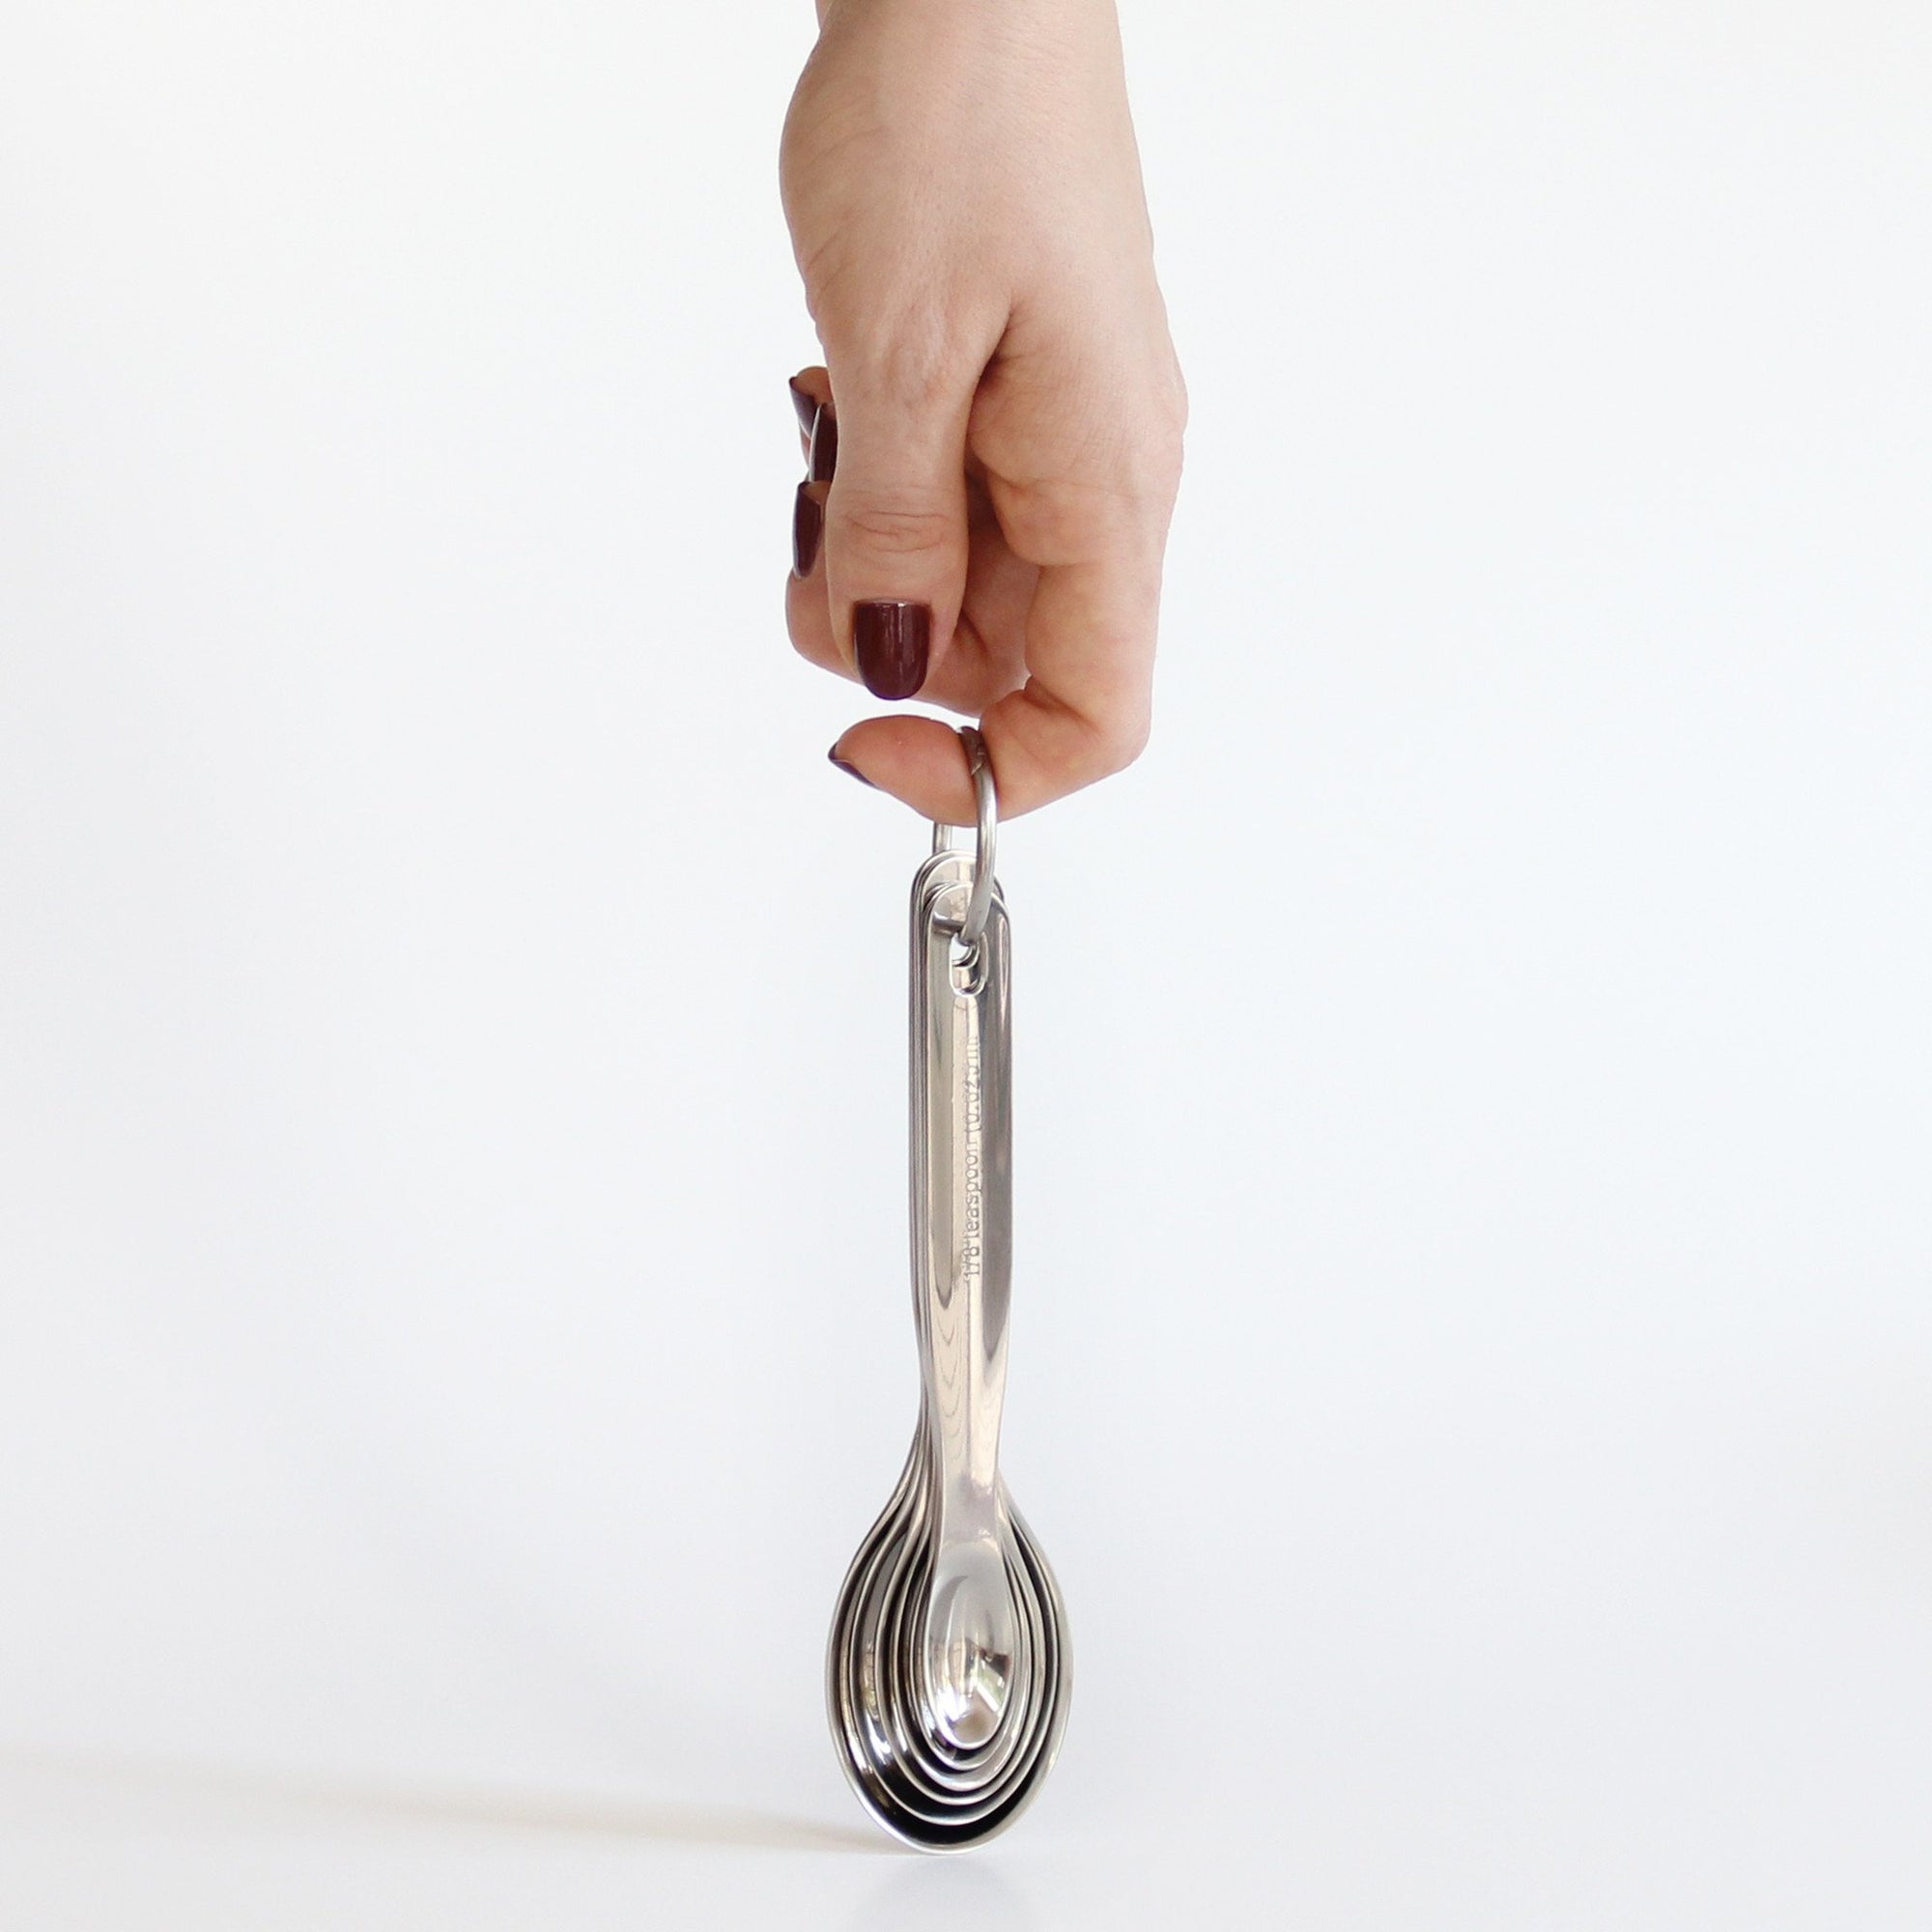 12 piece Measuring Cups & Spoons with Conversions Magnet - Indigo True